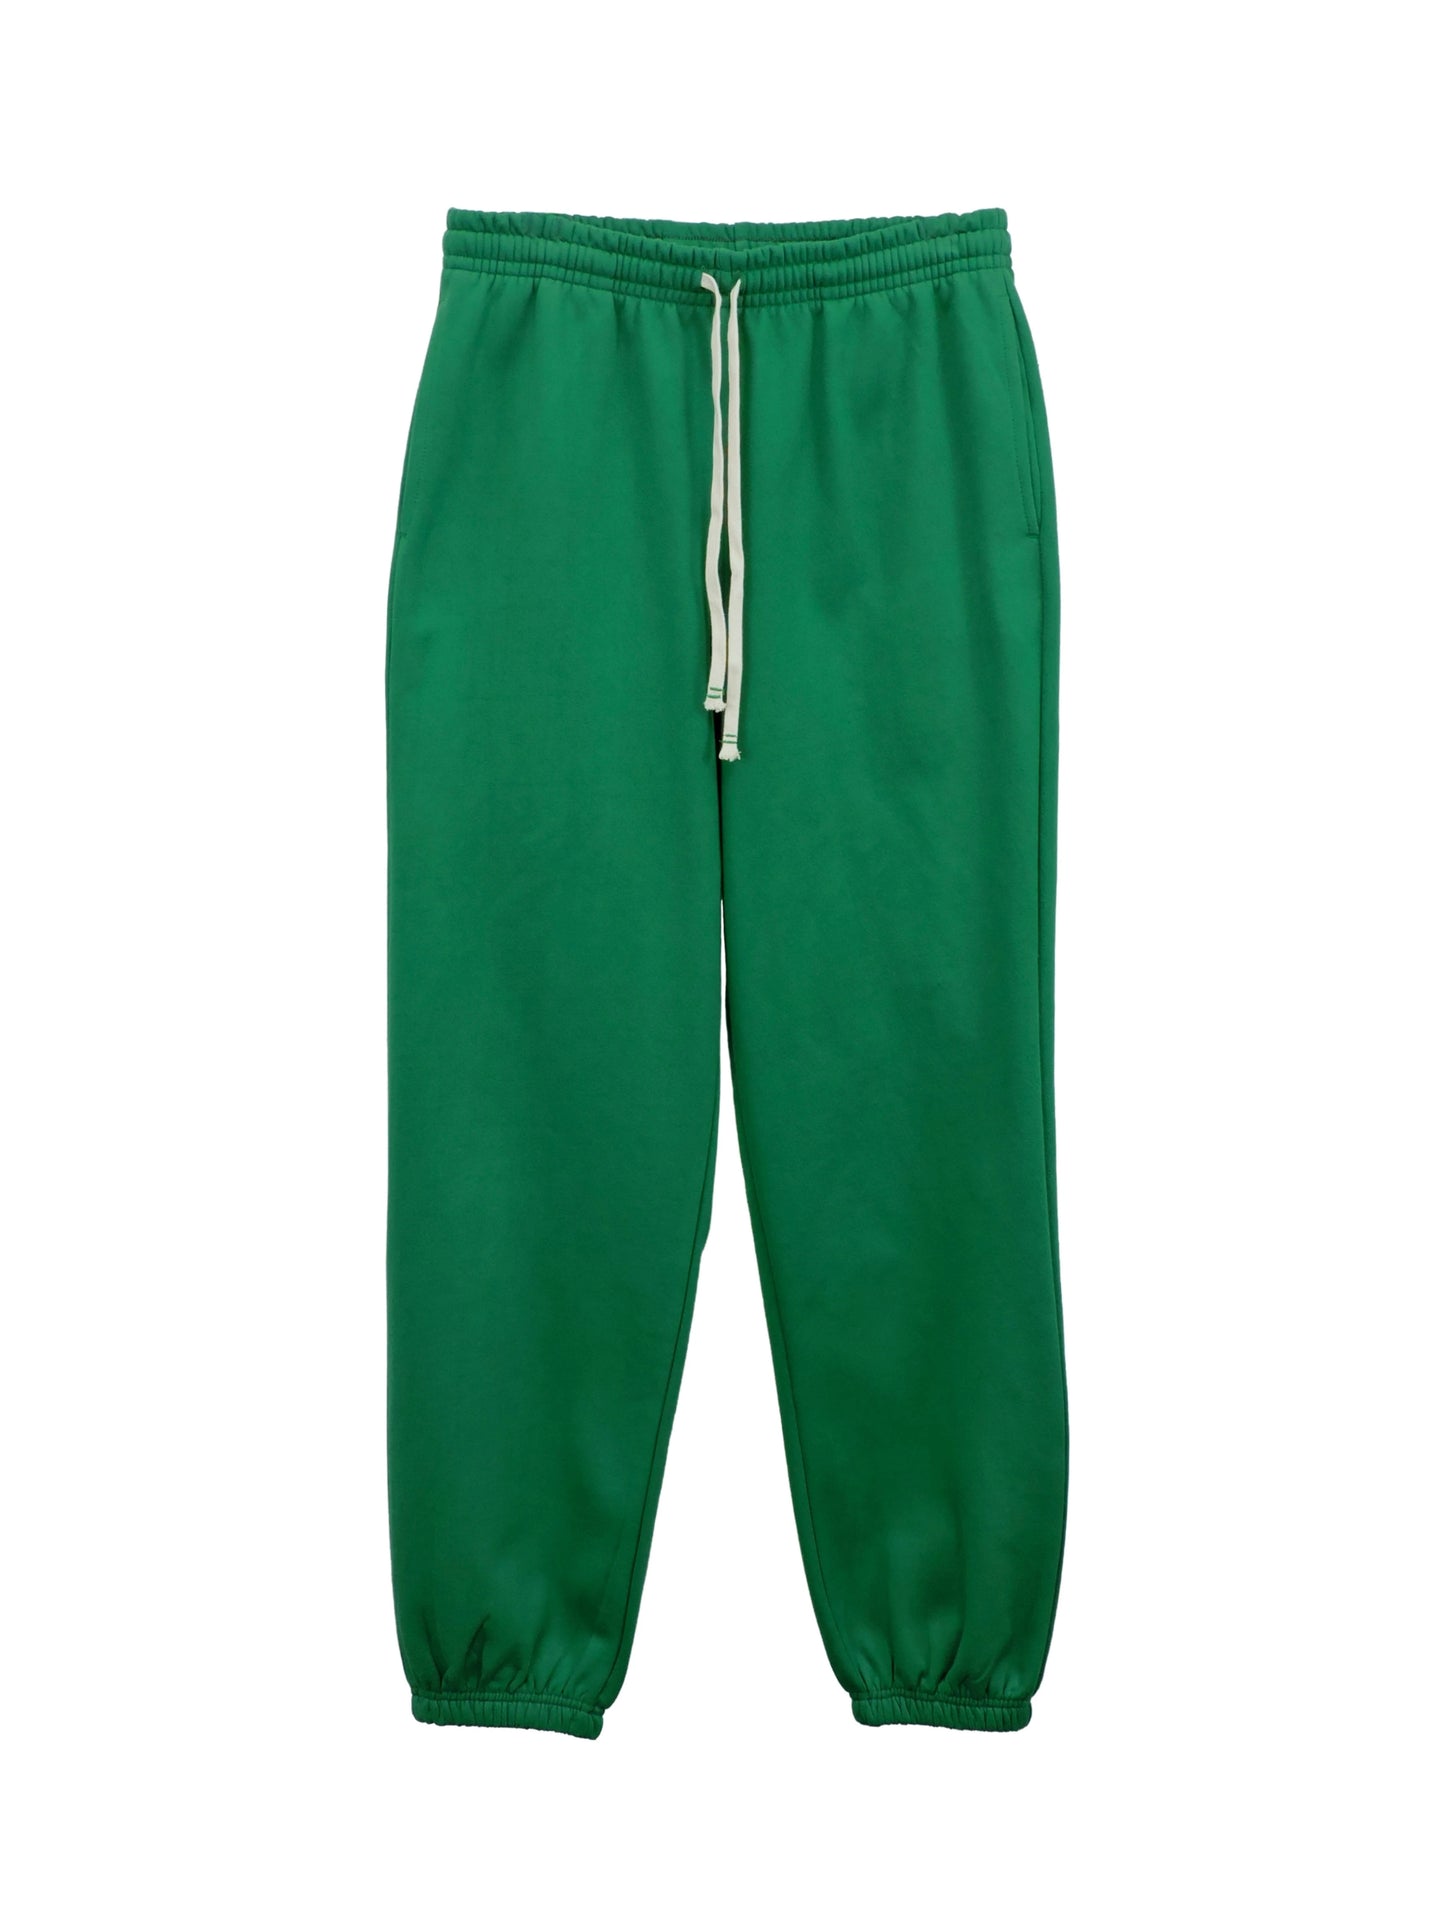 Green Fleece sweatpants with white drawstrings